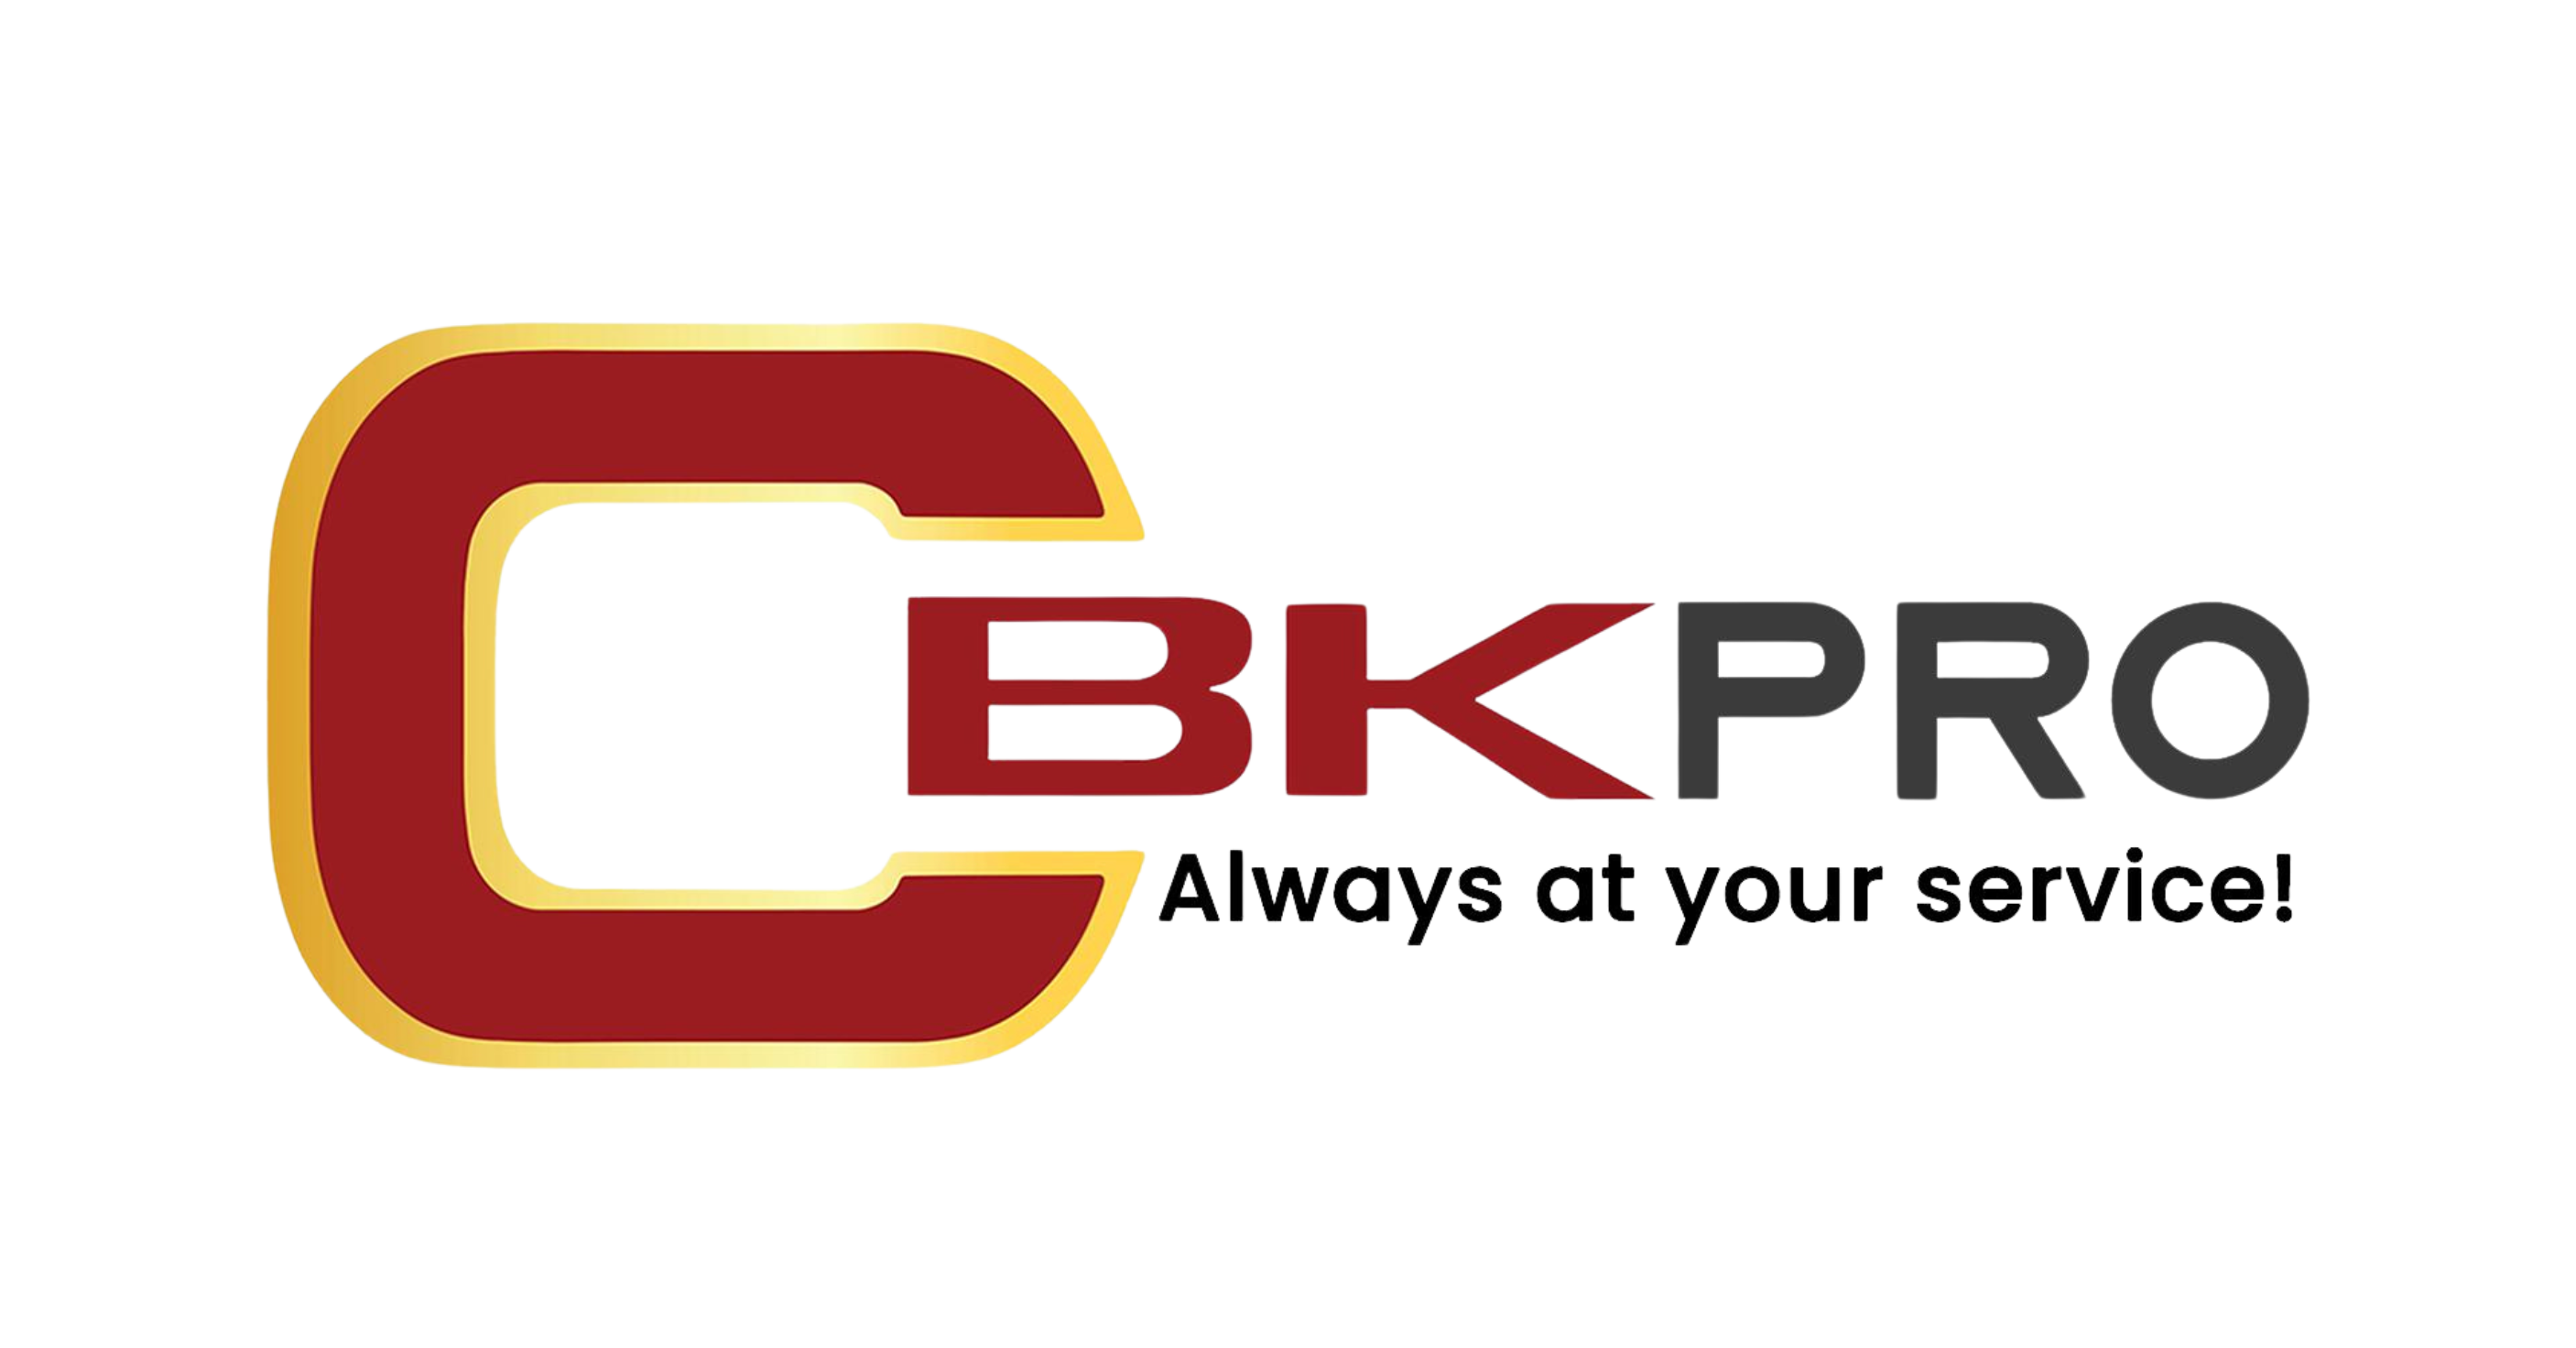 cbk_pro_tansparent_logo